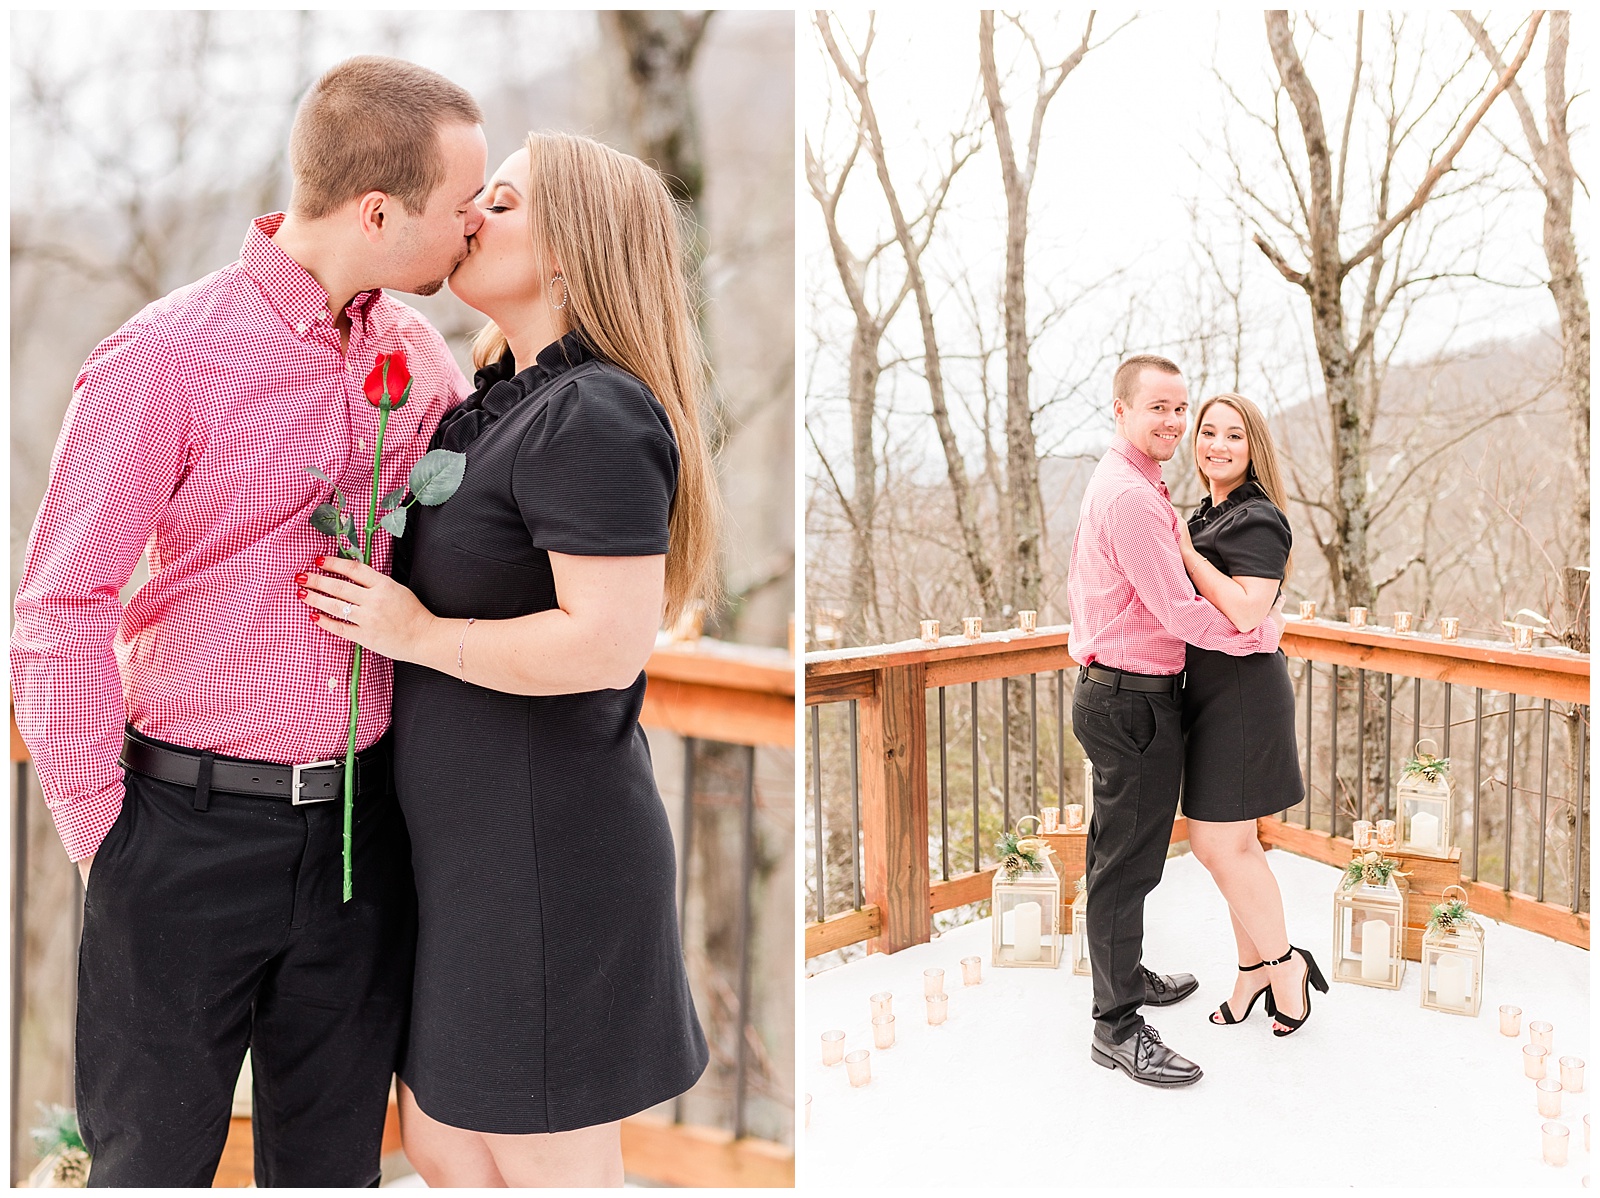 A Snowy Wintergreen Proposal | Sean and Lindsey | Virginia Wedding Photographer11.jpg